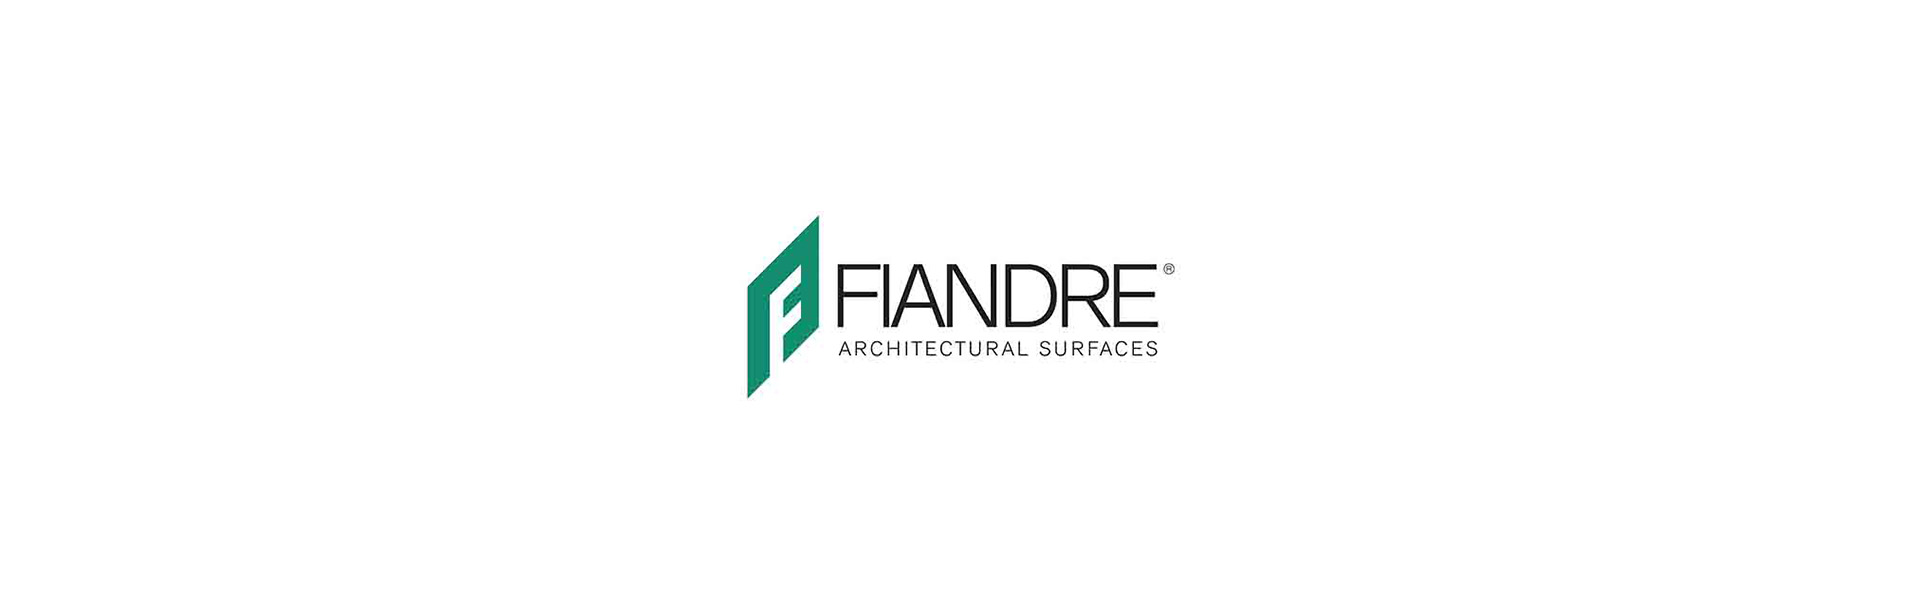 Fiandre Architectural Surfaces